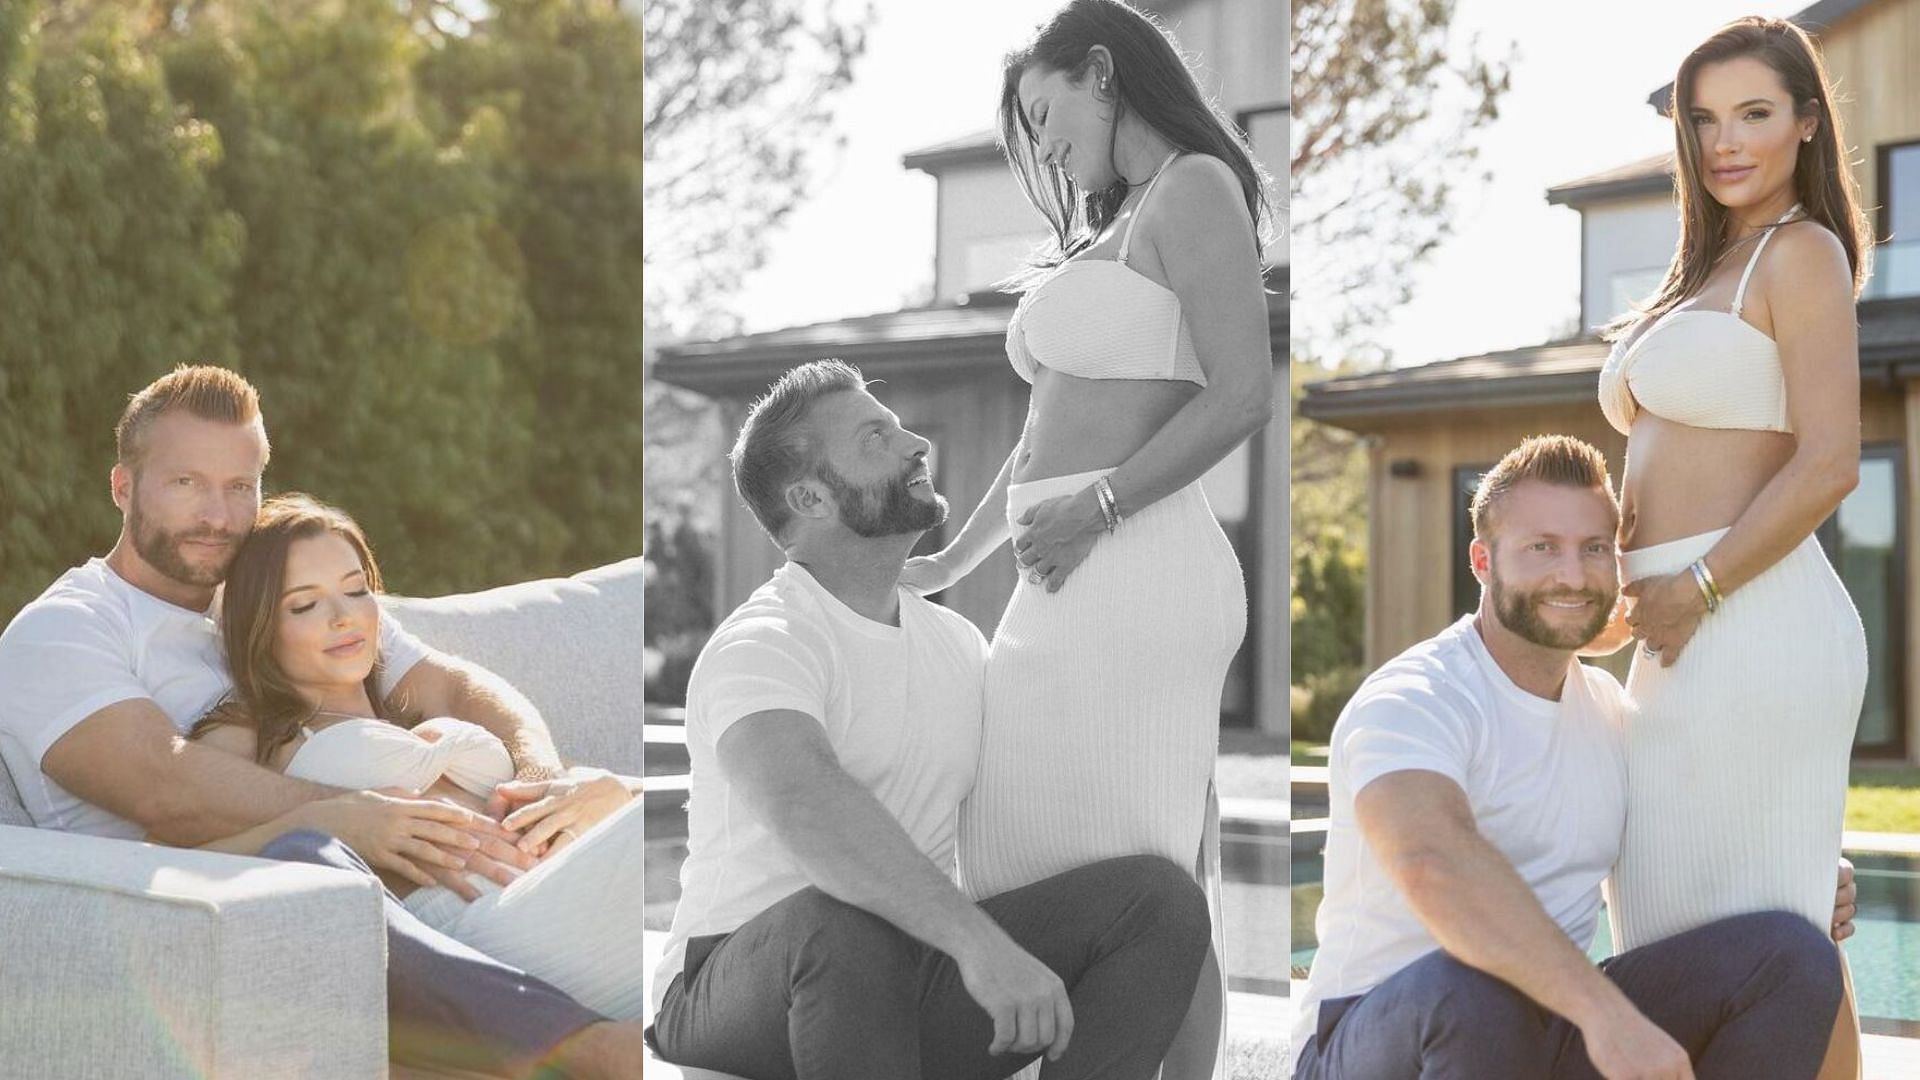 Sean McVay and Veronika Khomyn are expecting their first baby soon. (Image via Veronika Khomyn on Instagram)